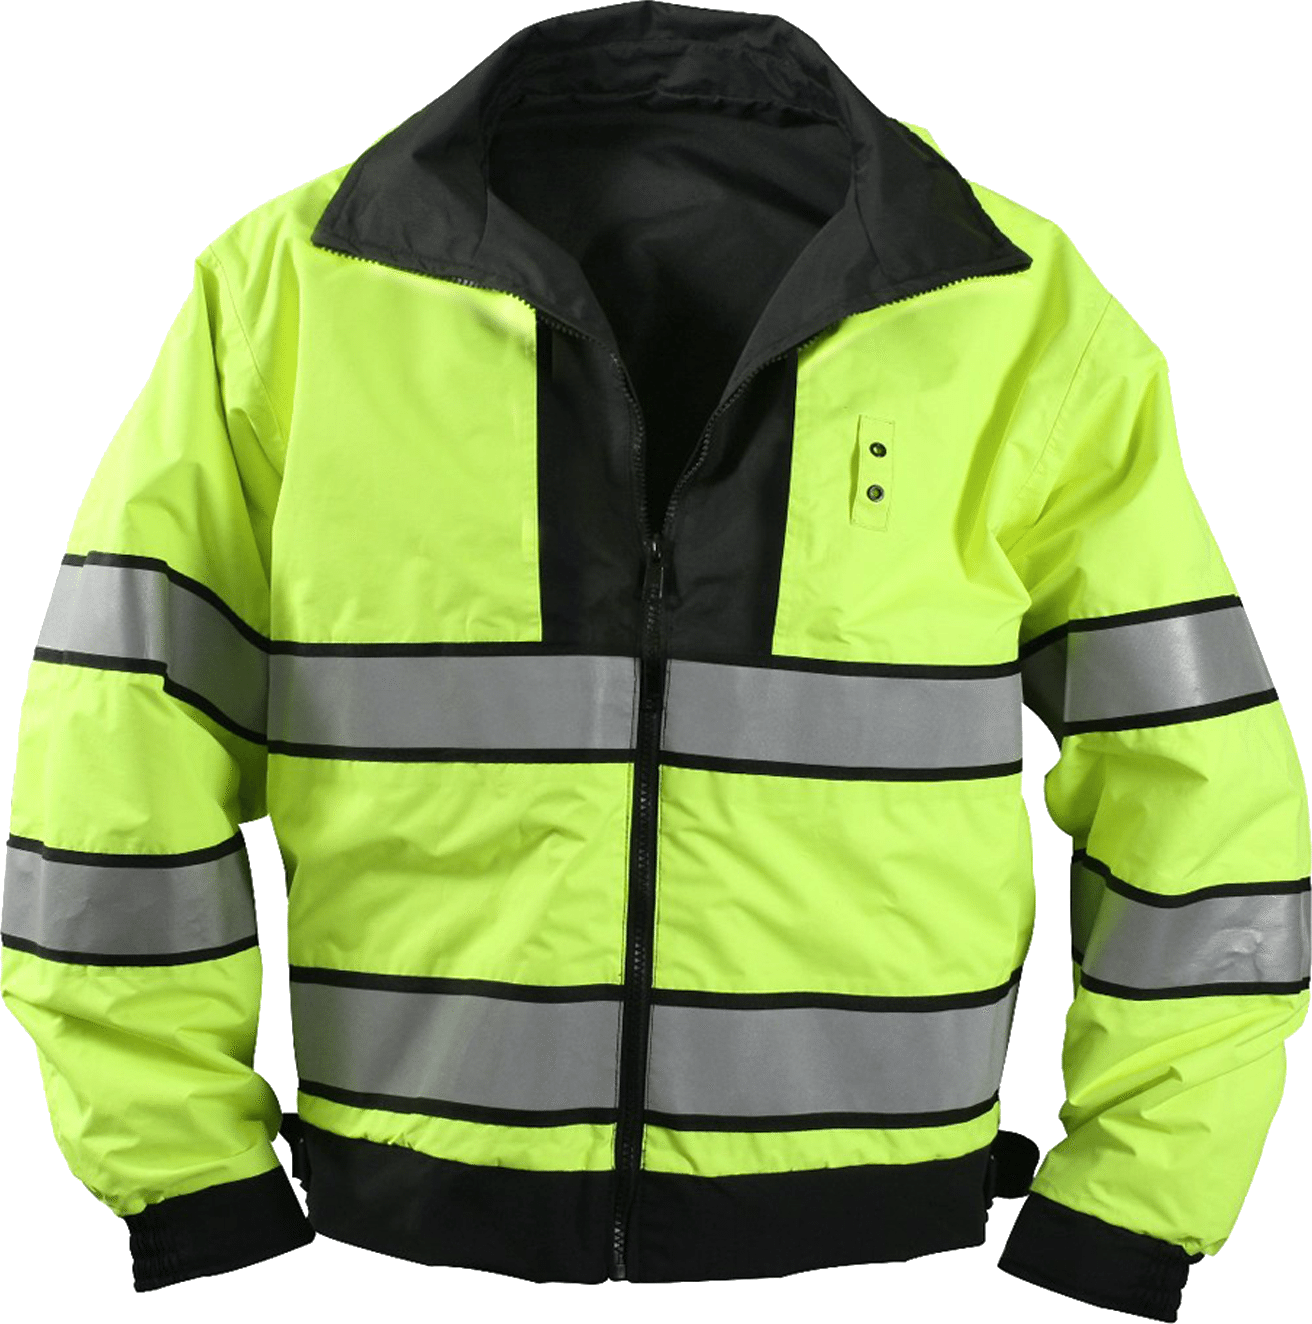 Rothco 8720: Dual-Sided Hi-Viz Yellow & Classic Black Reversible Uniform Jacket - Clothing & Accessories